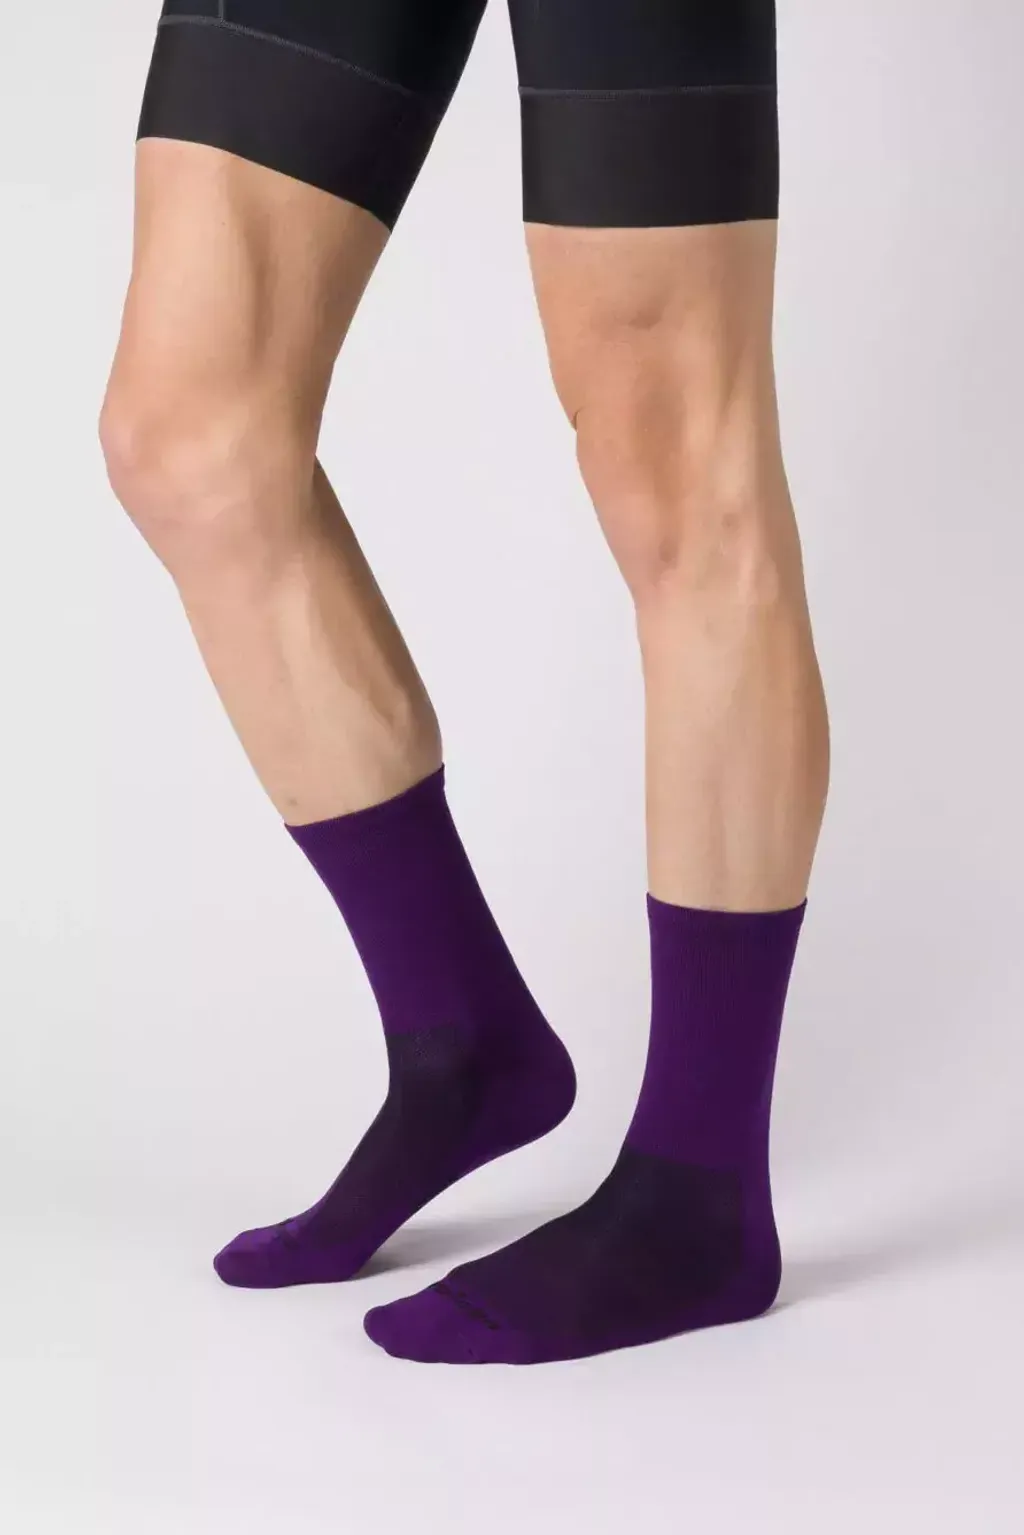 nologo_classic_purple_cycling_socks-892x1337.jpg